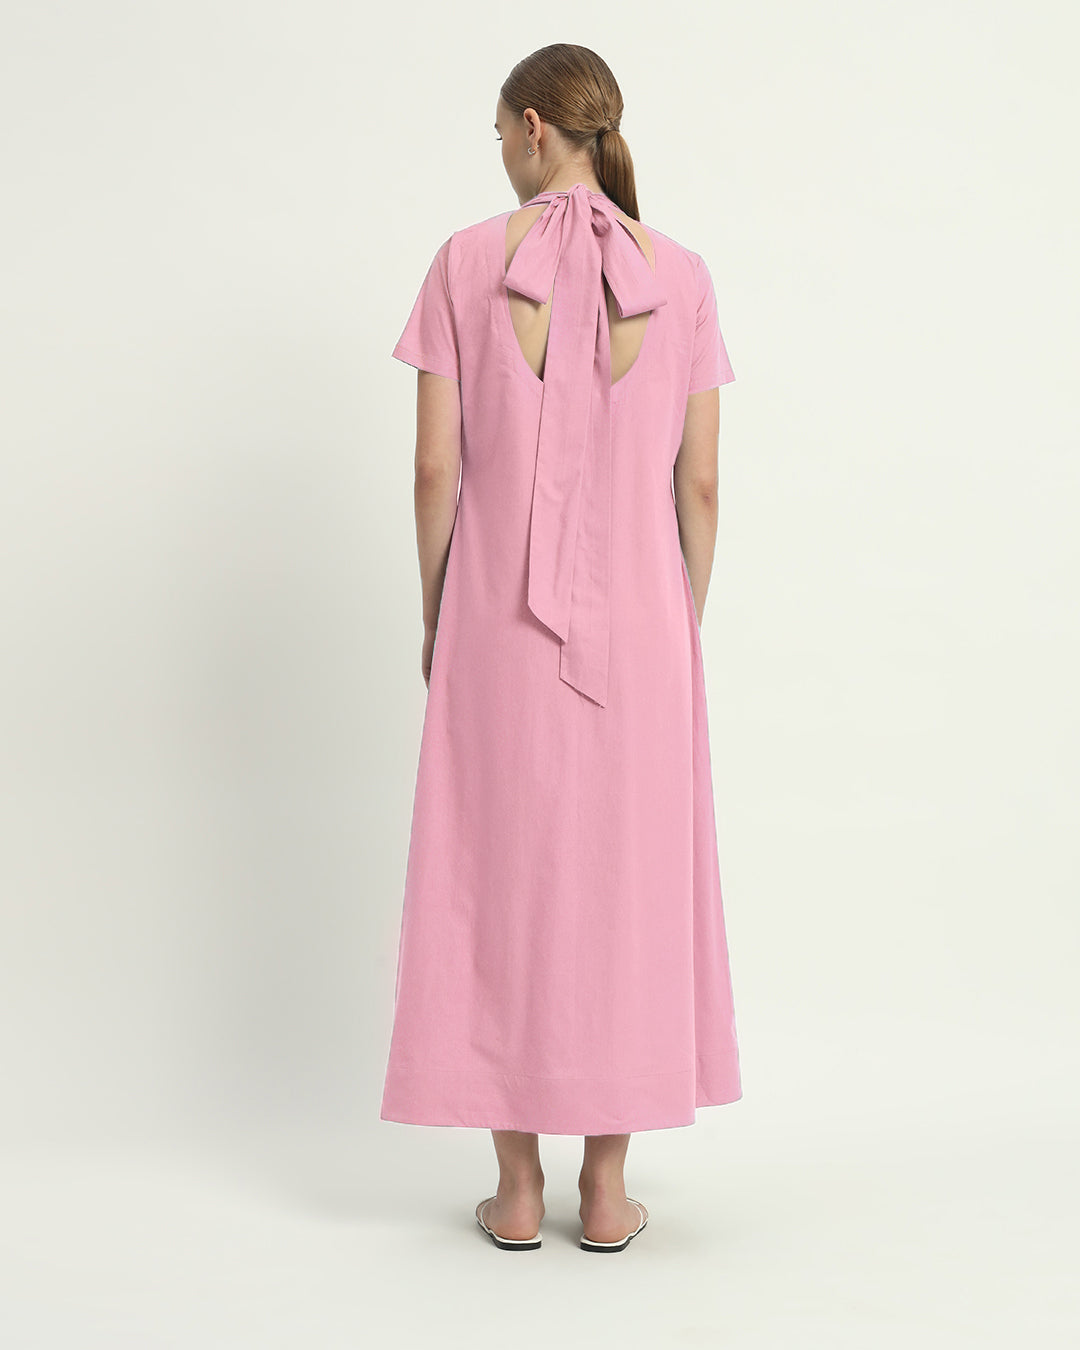 The Hermon Fondant Pink Cotton Dress